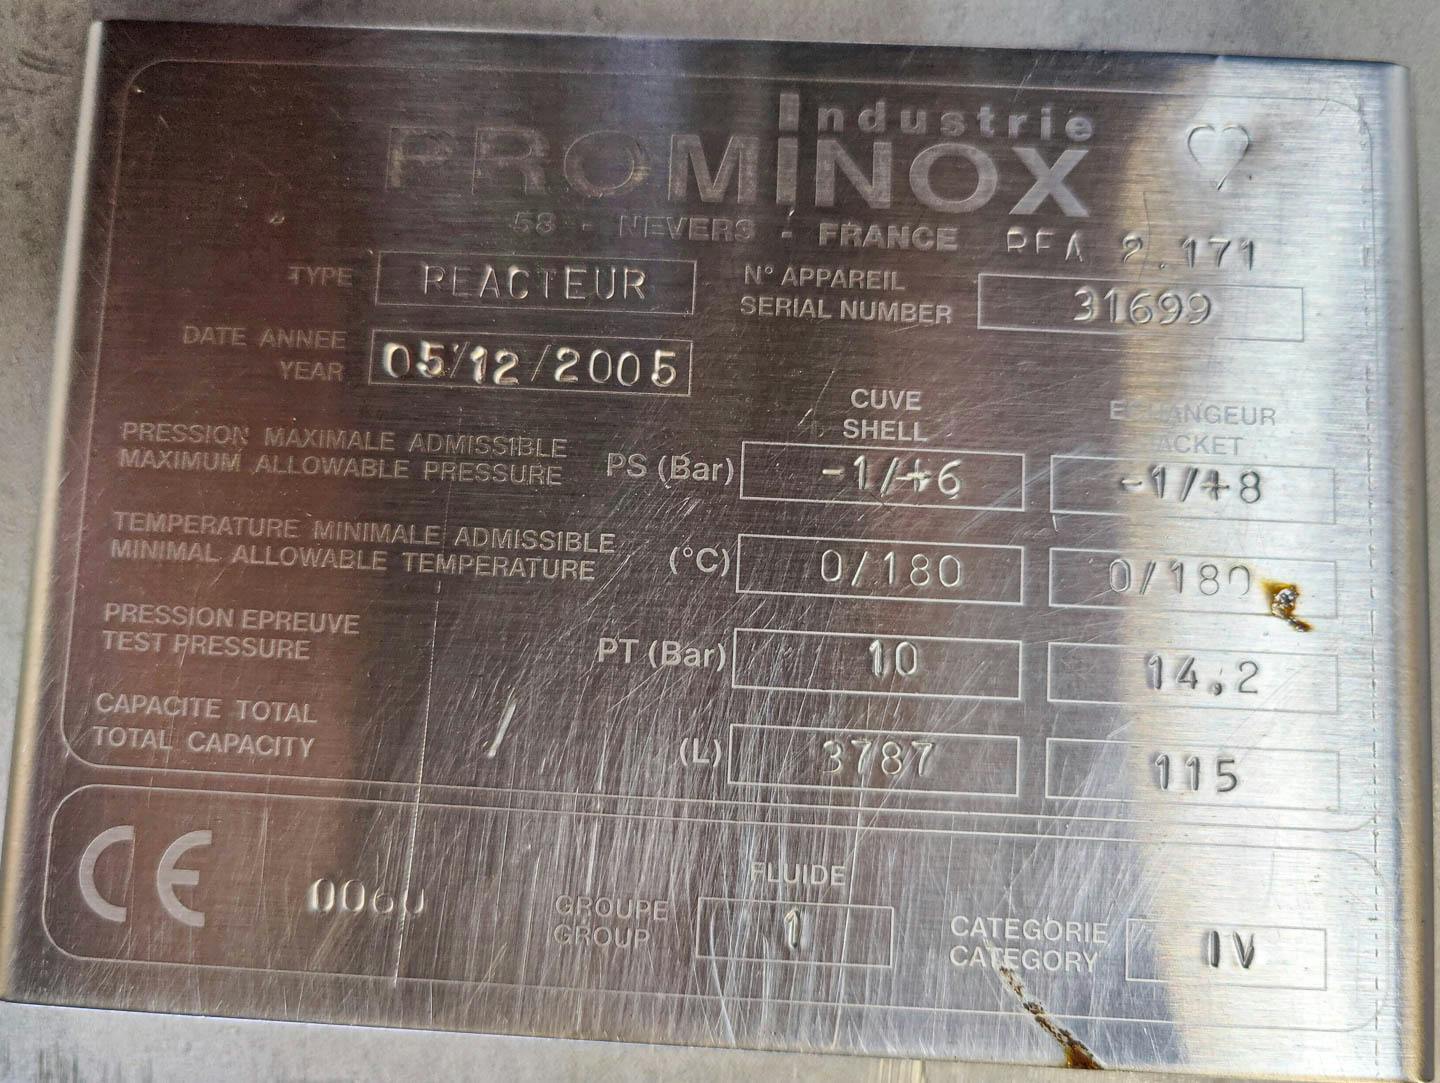 Prominox 3000Ltr. - Reattore in acciaio inox - image 8